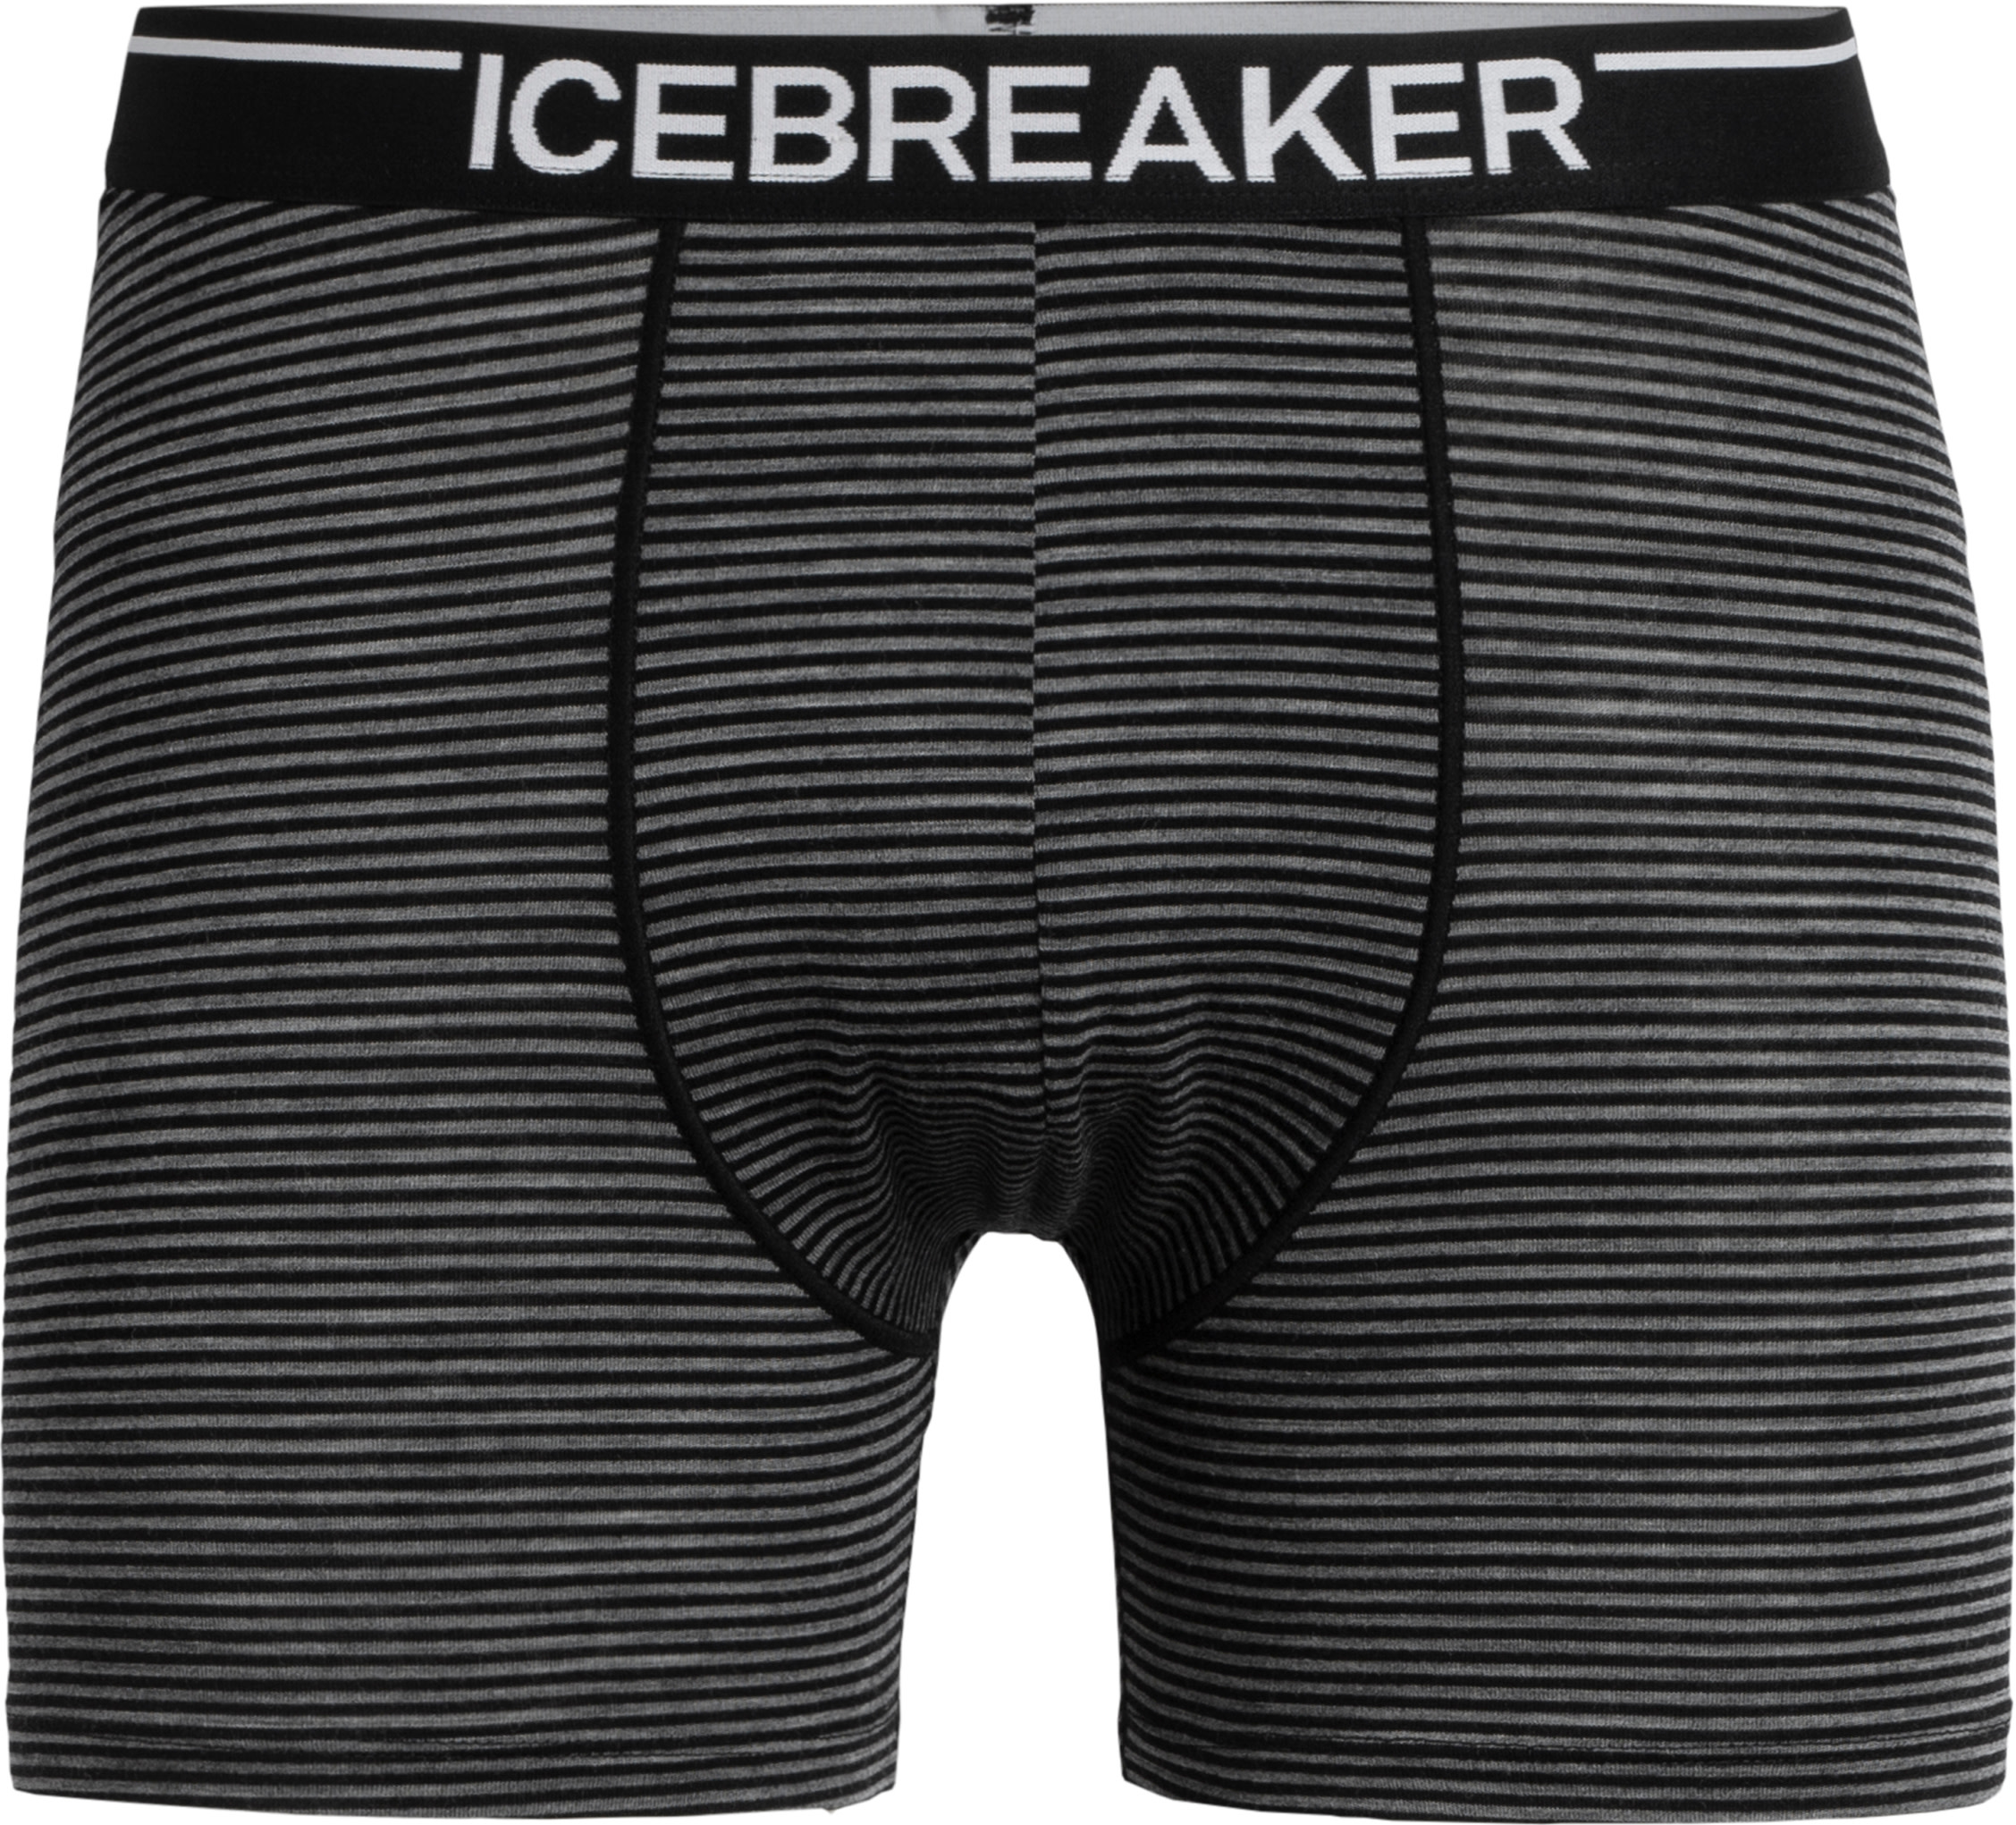 Icebreaker Men’s Anatomica Boxers Gritstone HTHR